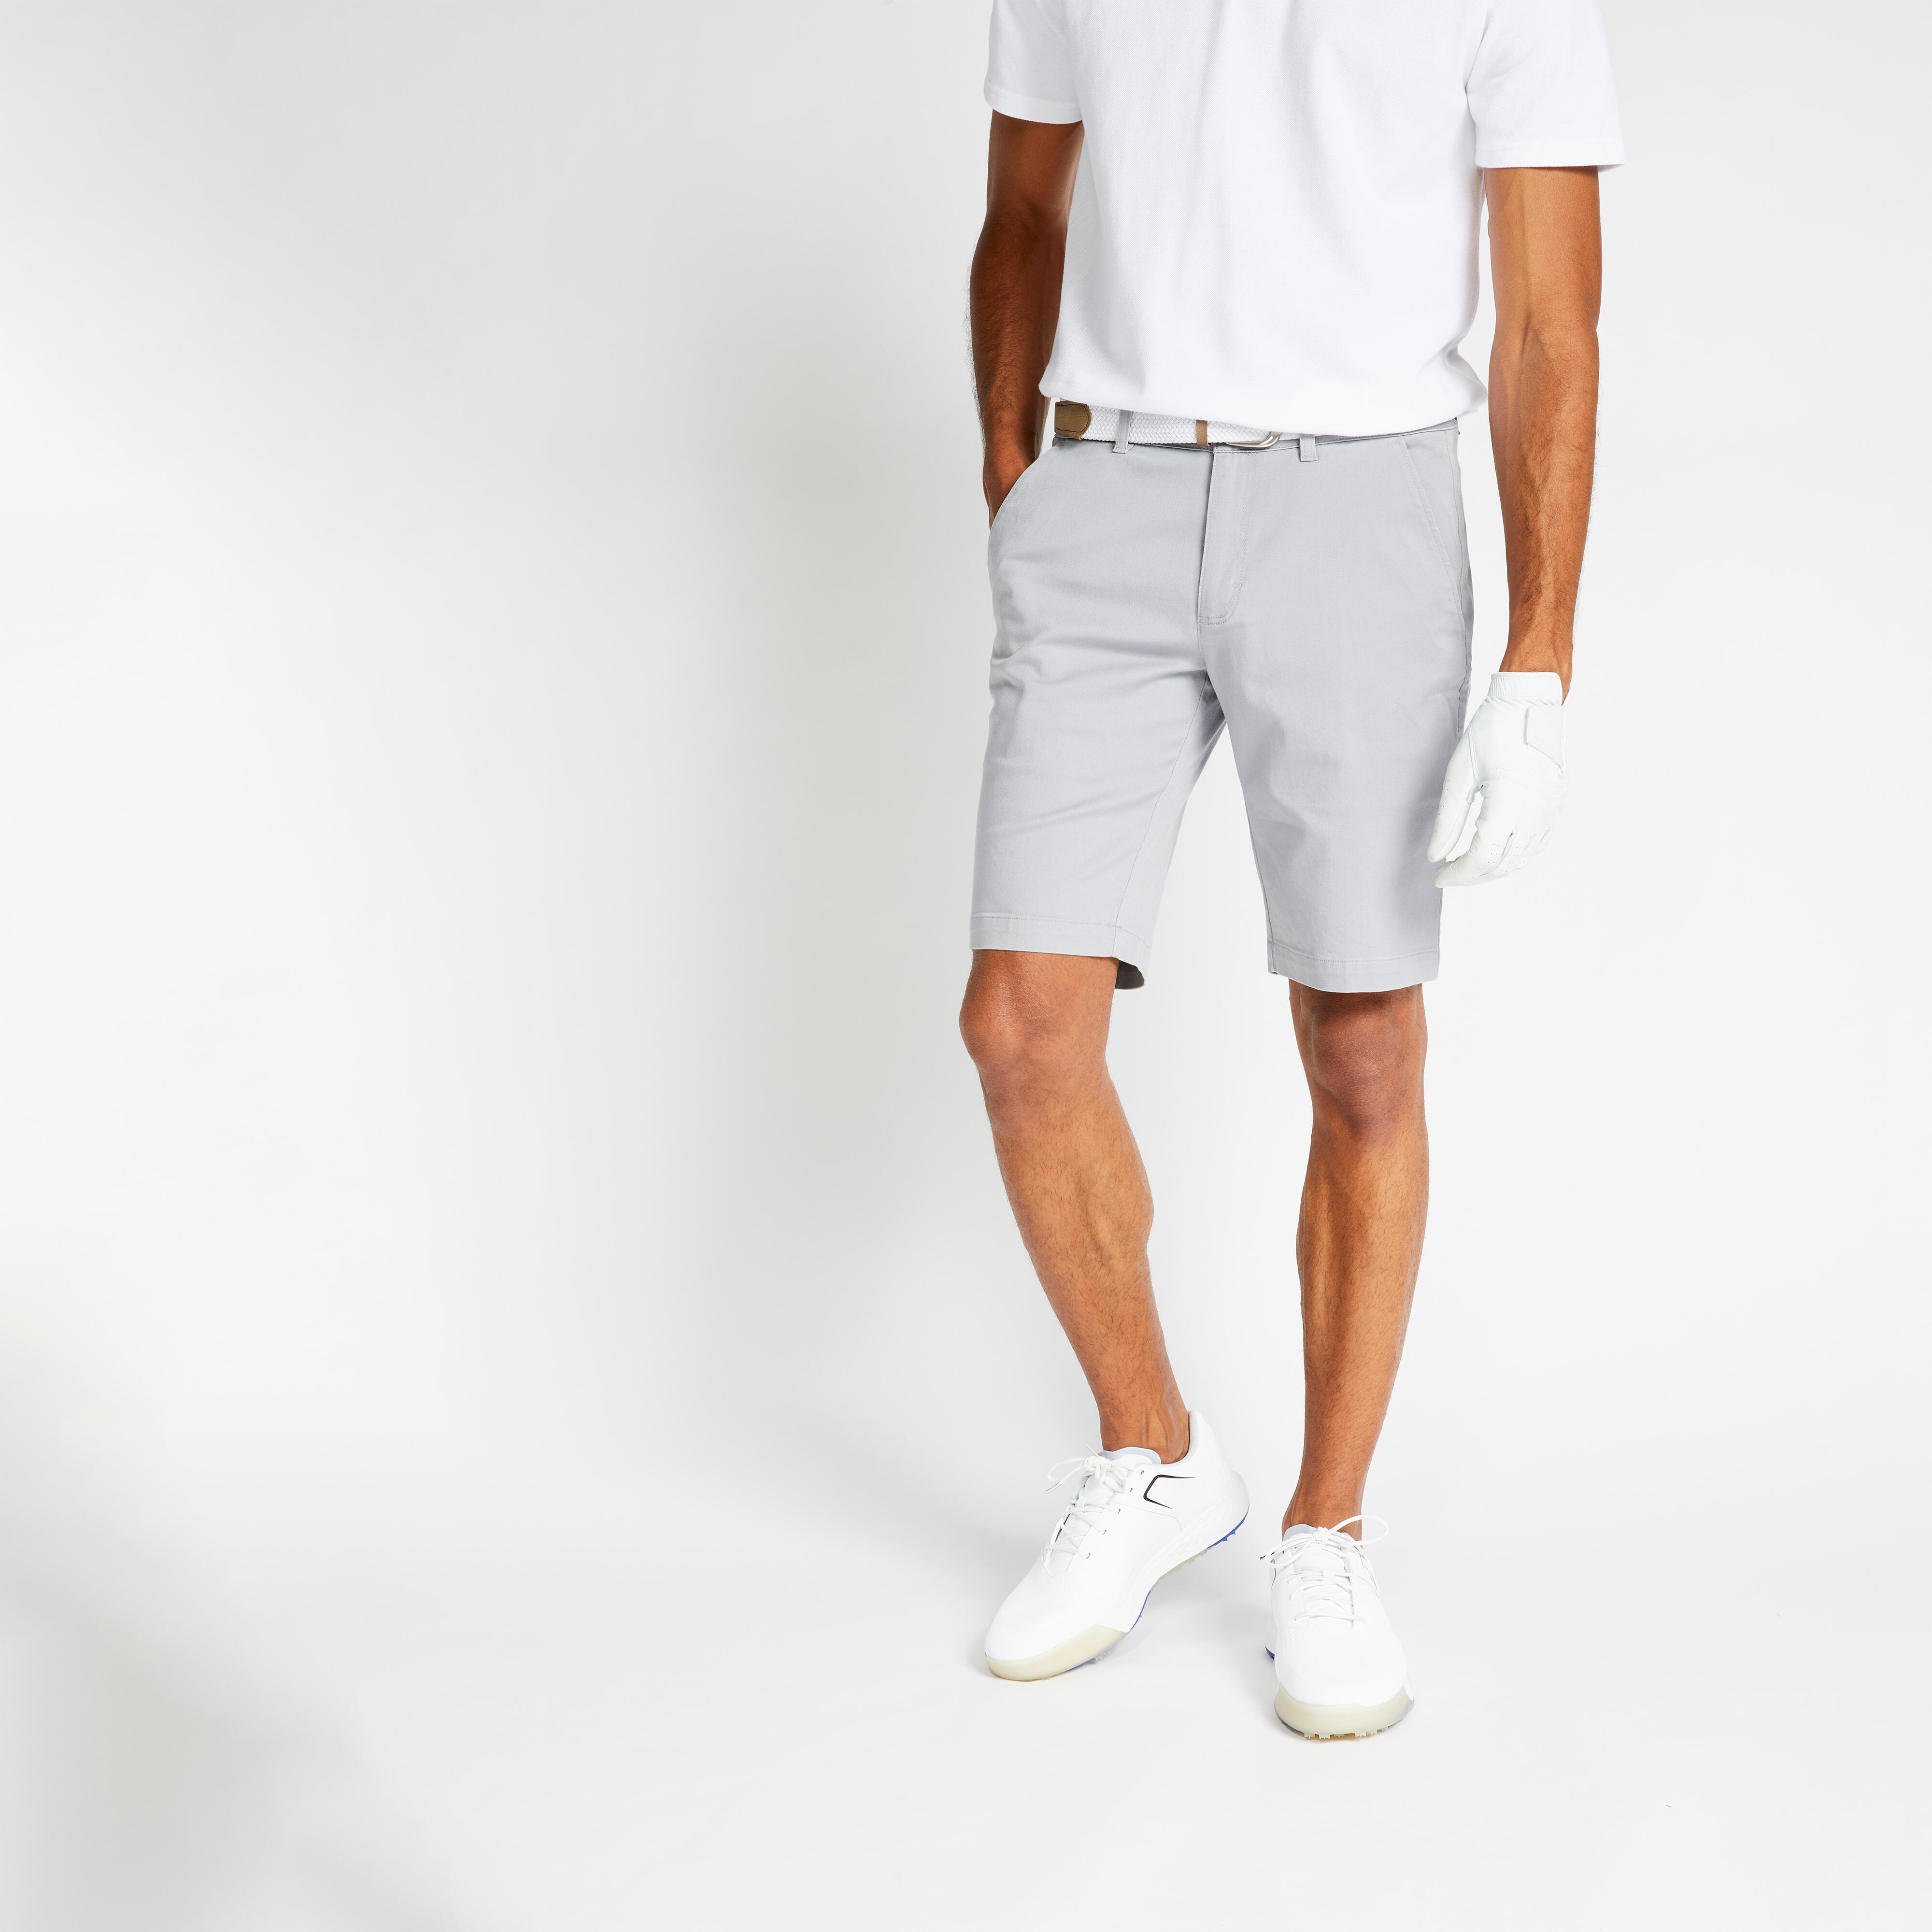 Men's Golf Chino Shorts - MW 500 Grey - Zinc grey - Inesis - Decathlon